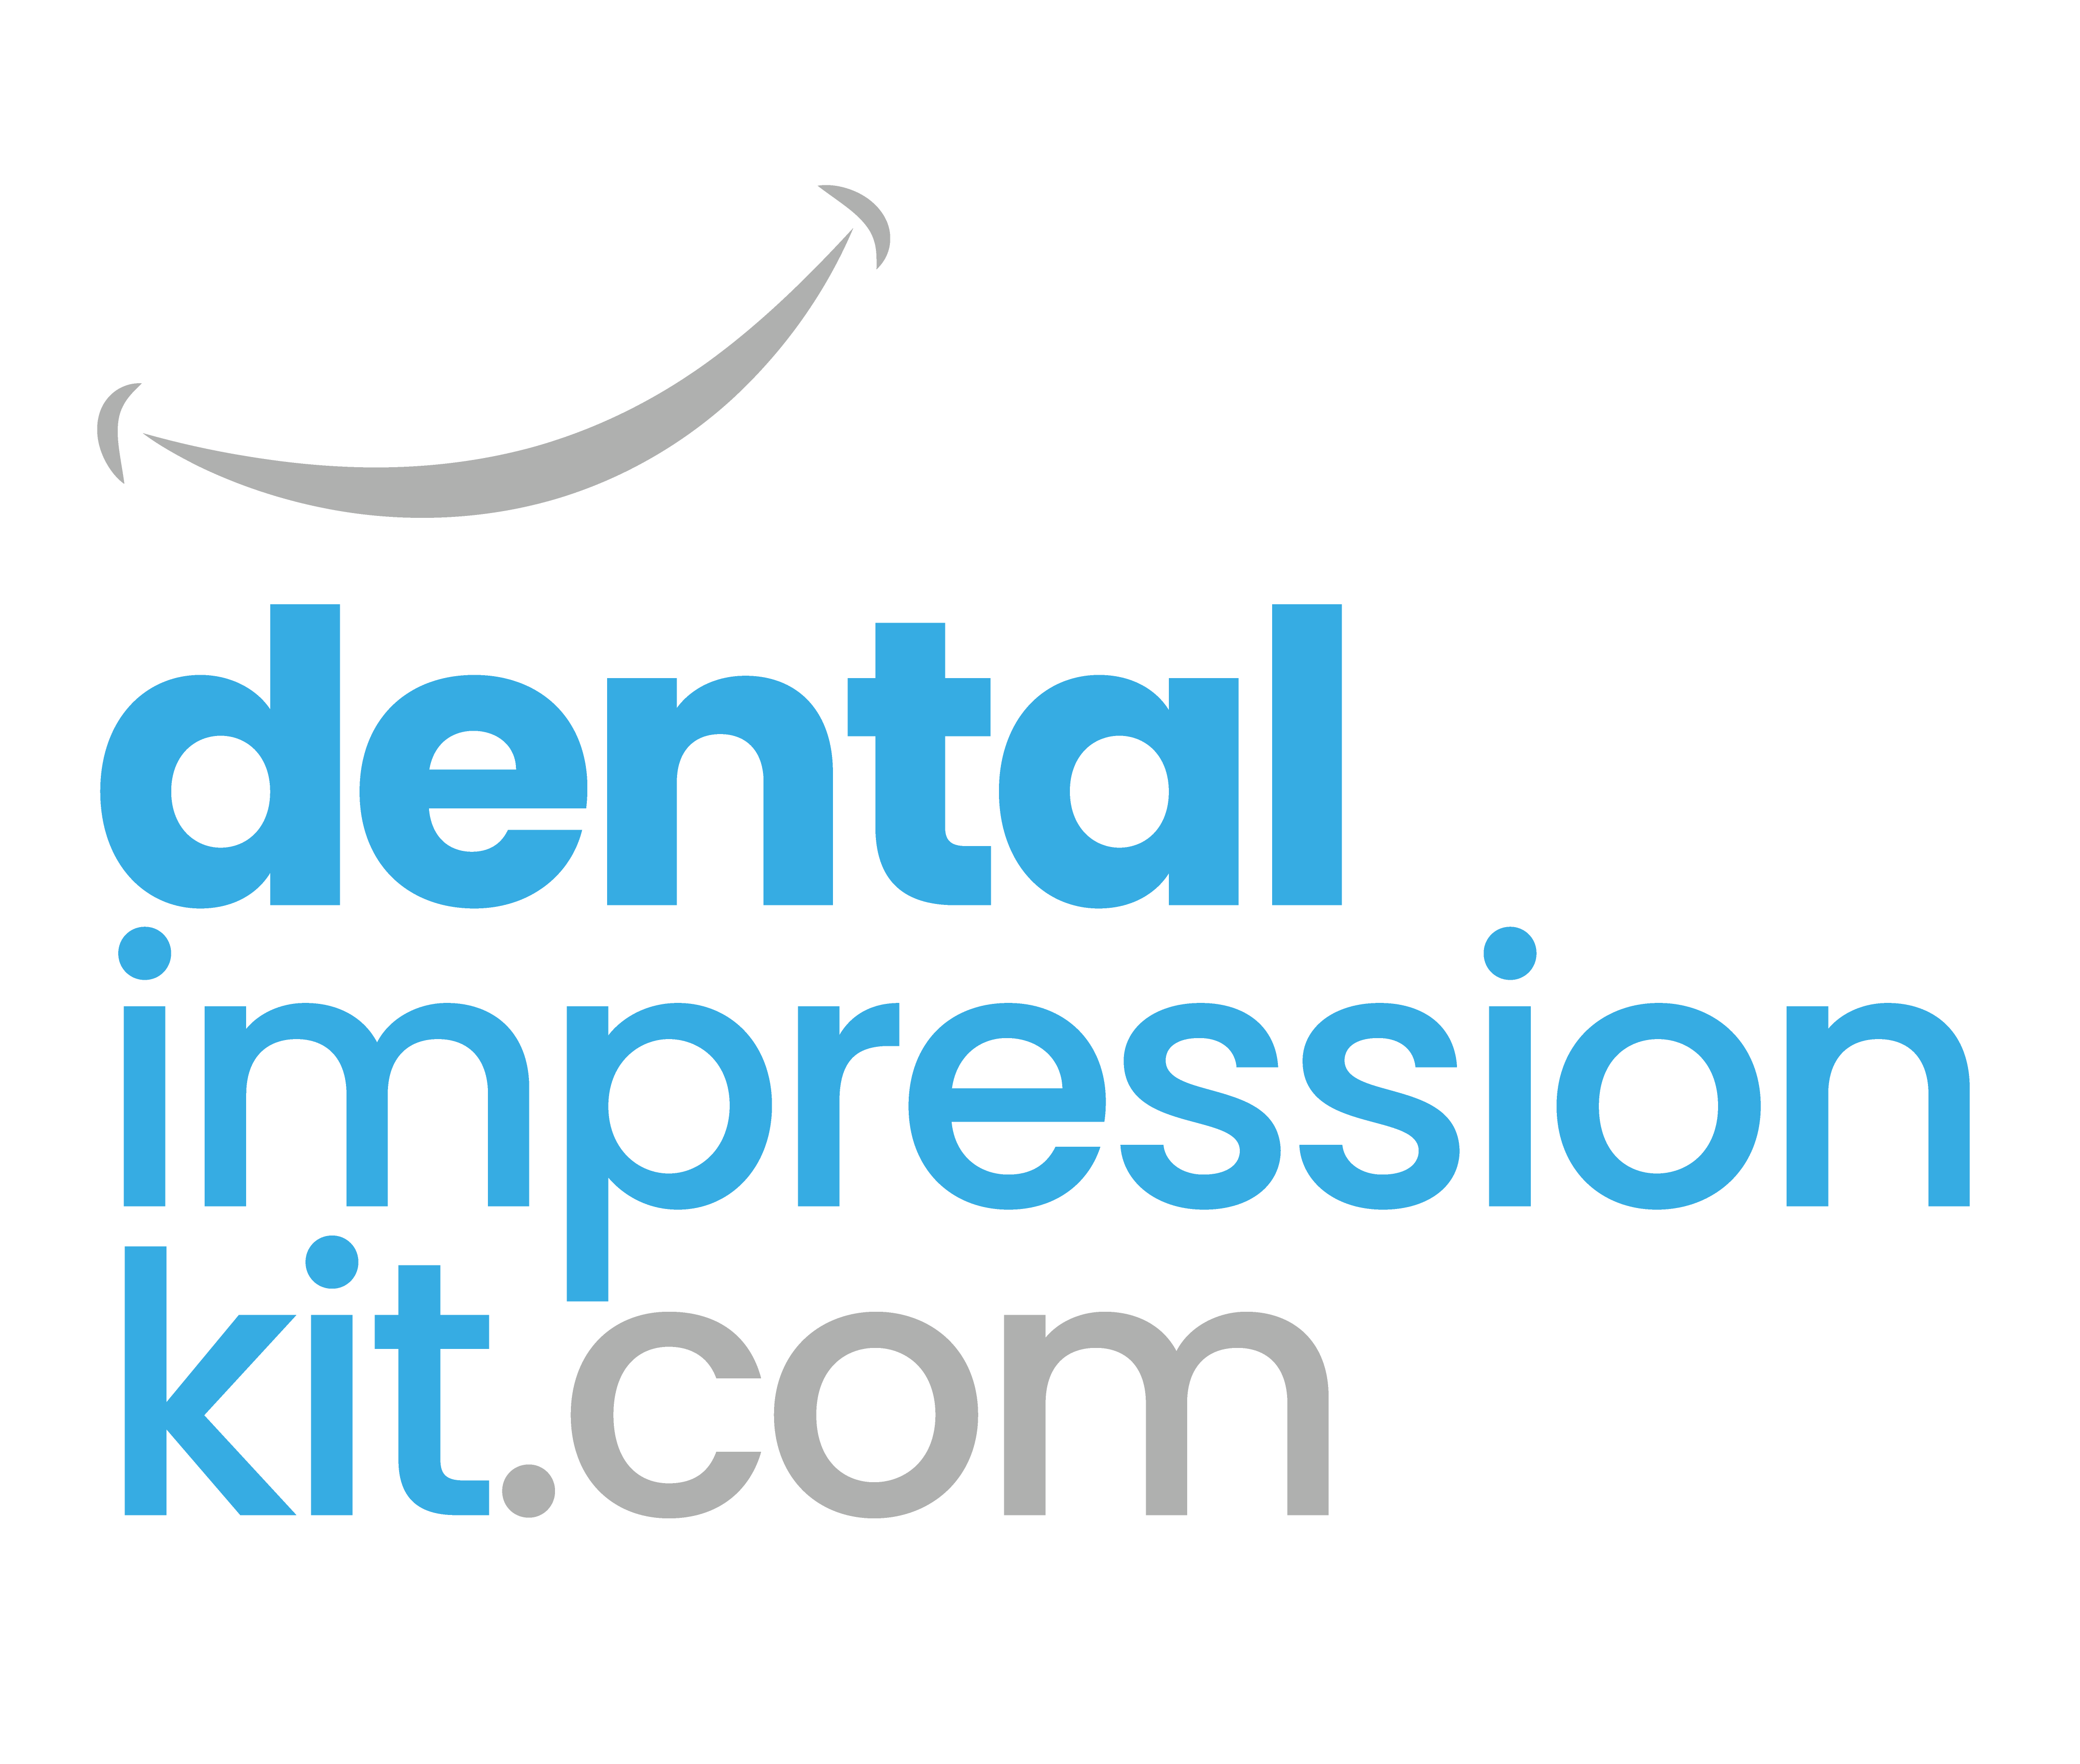 cropped full size dental impression kit